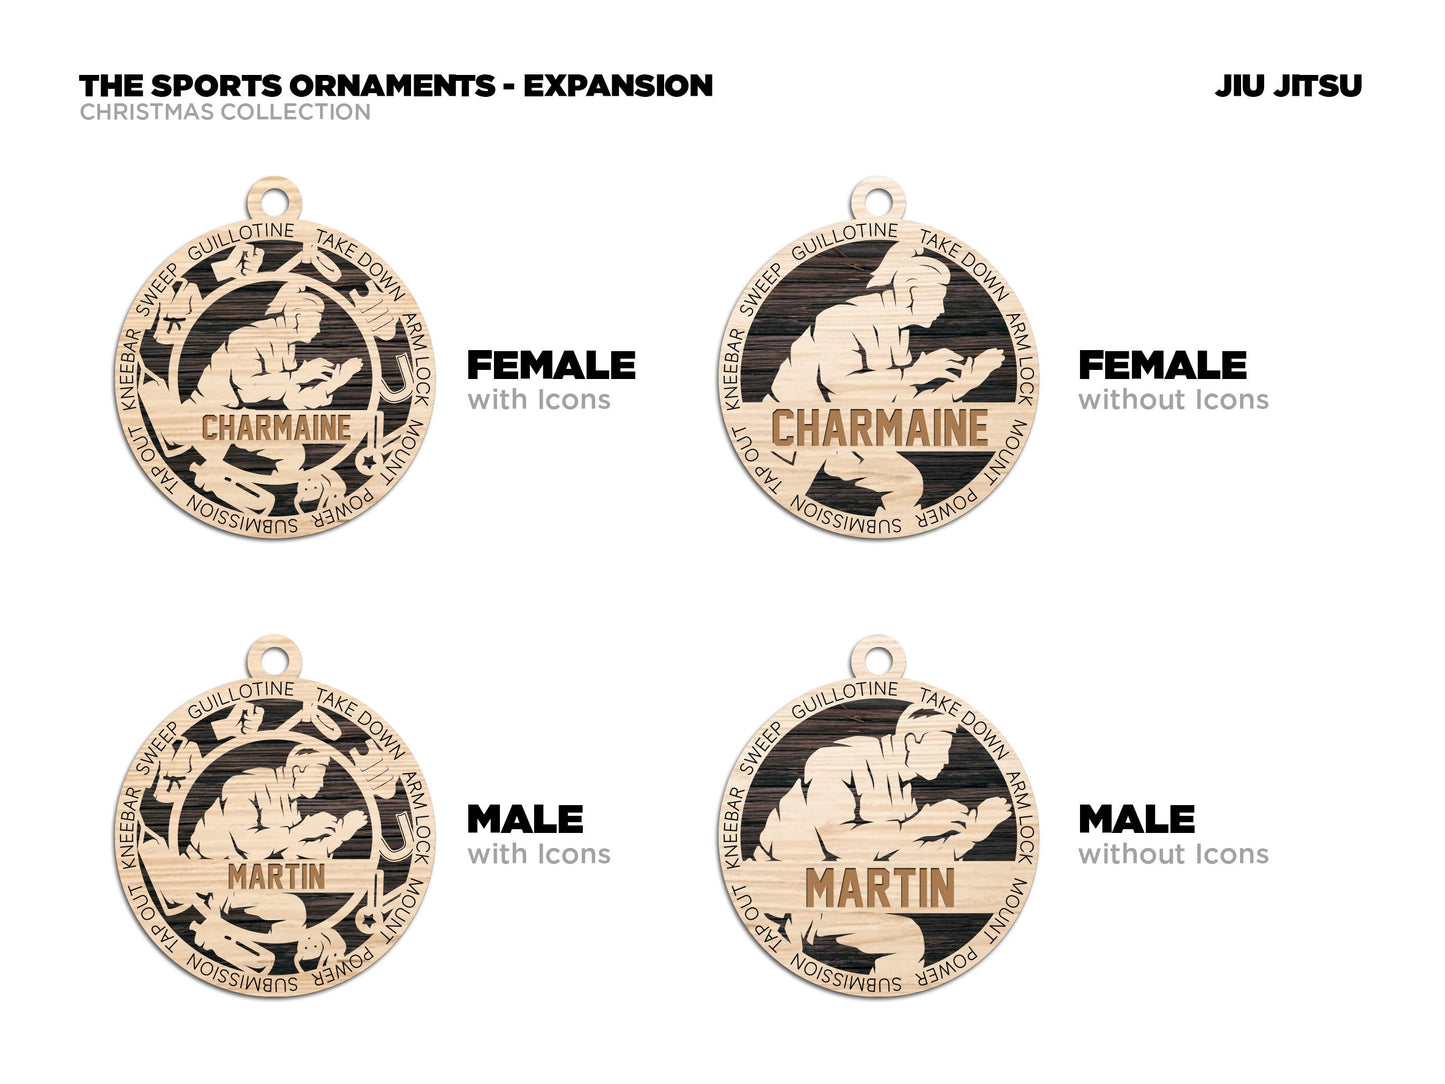 Jiu Jitsu - Stadium Series Ornaments - 4 Unique designs - SVG, PDF, AI File Download - Sized for Glowforge